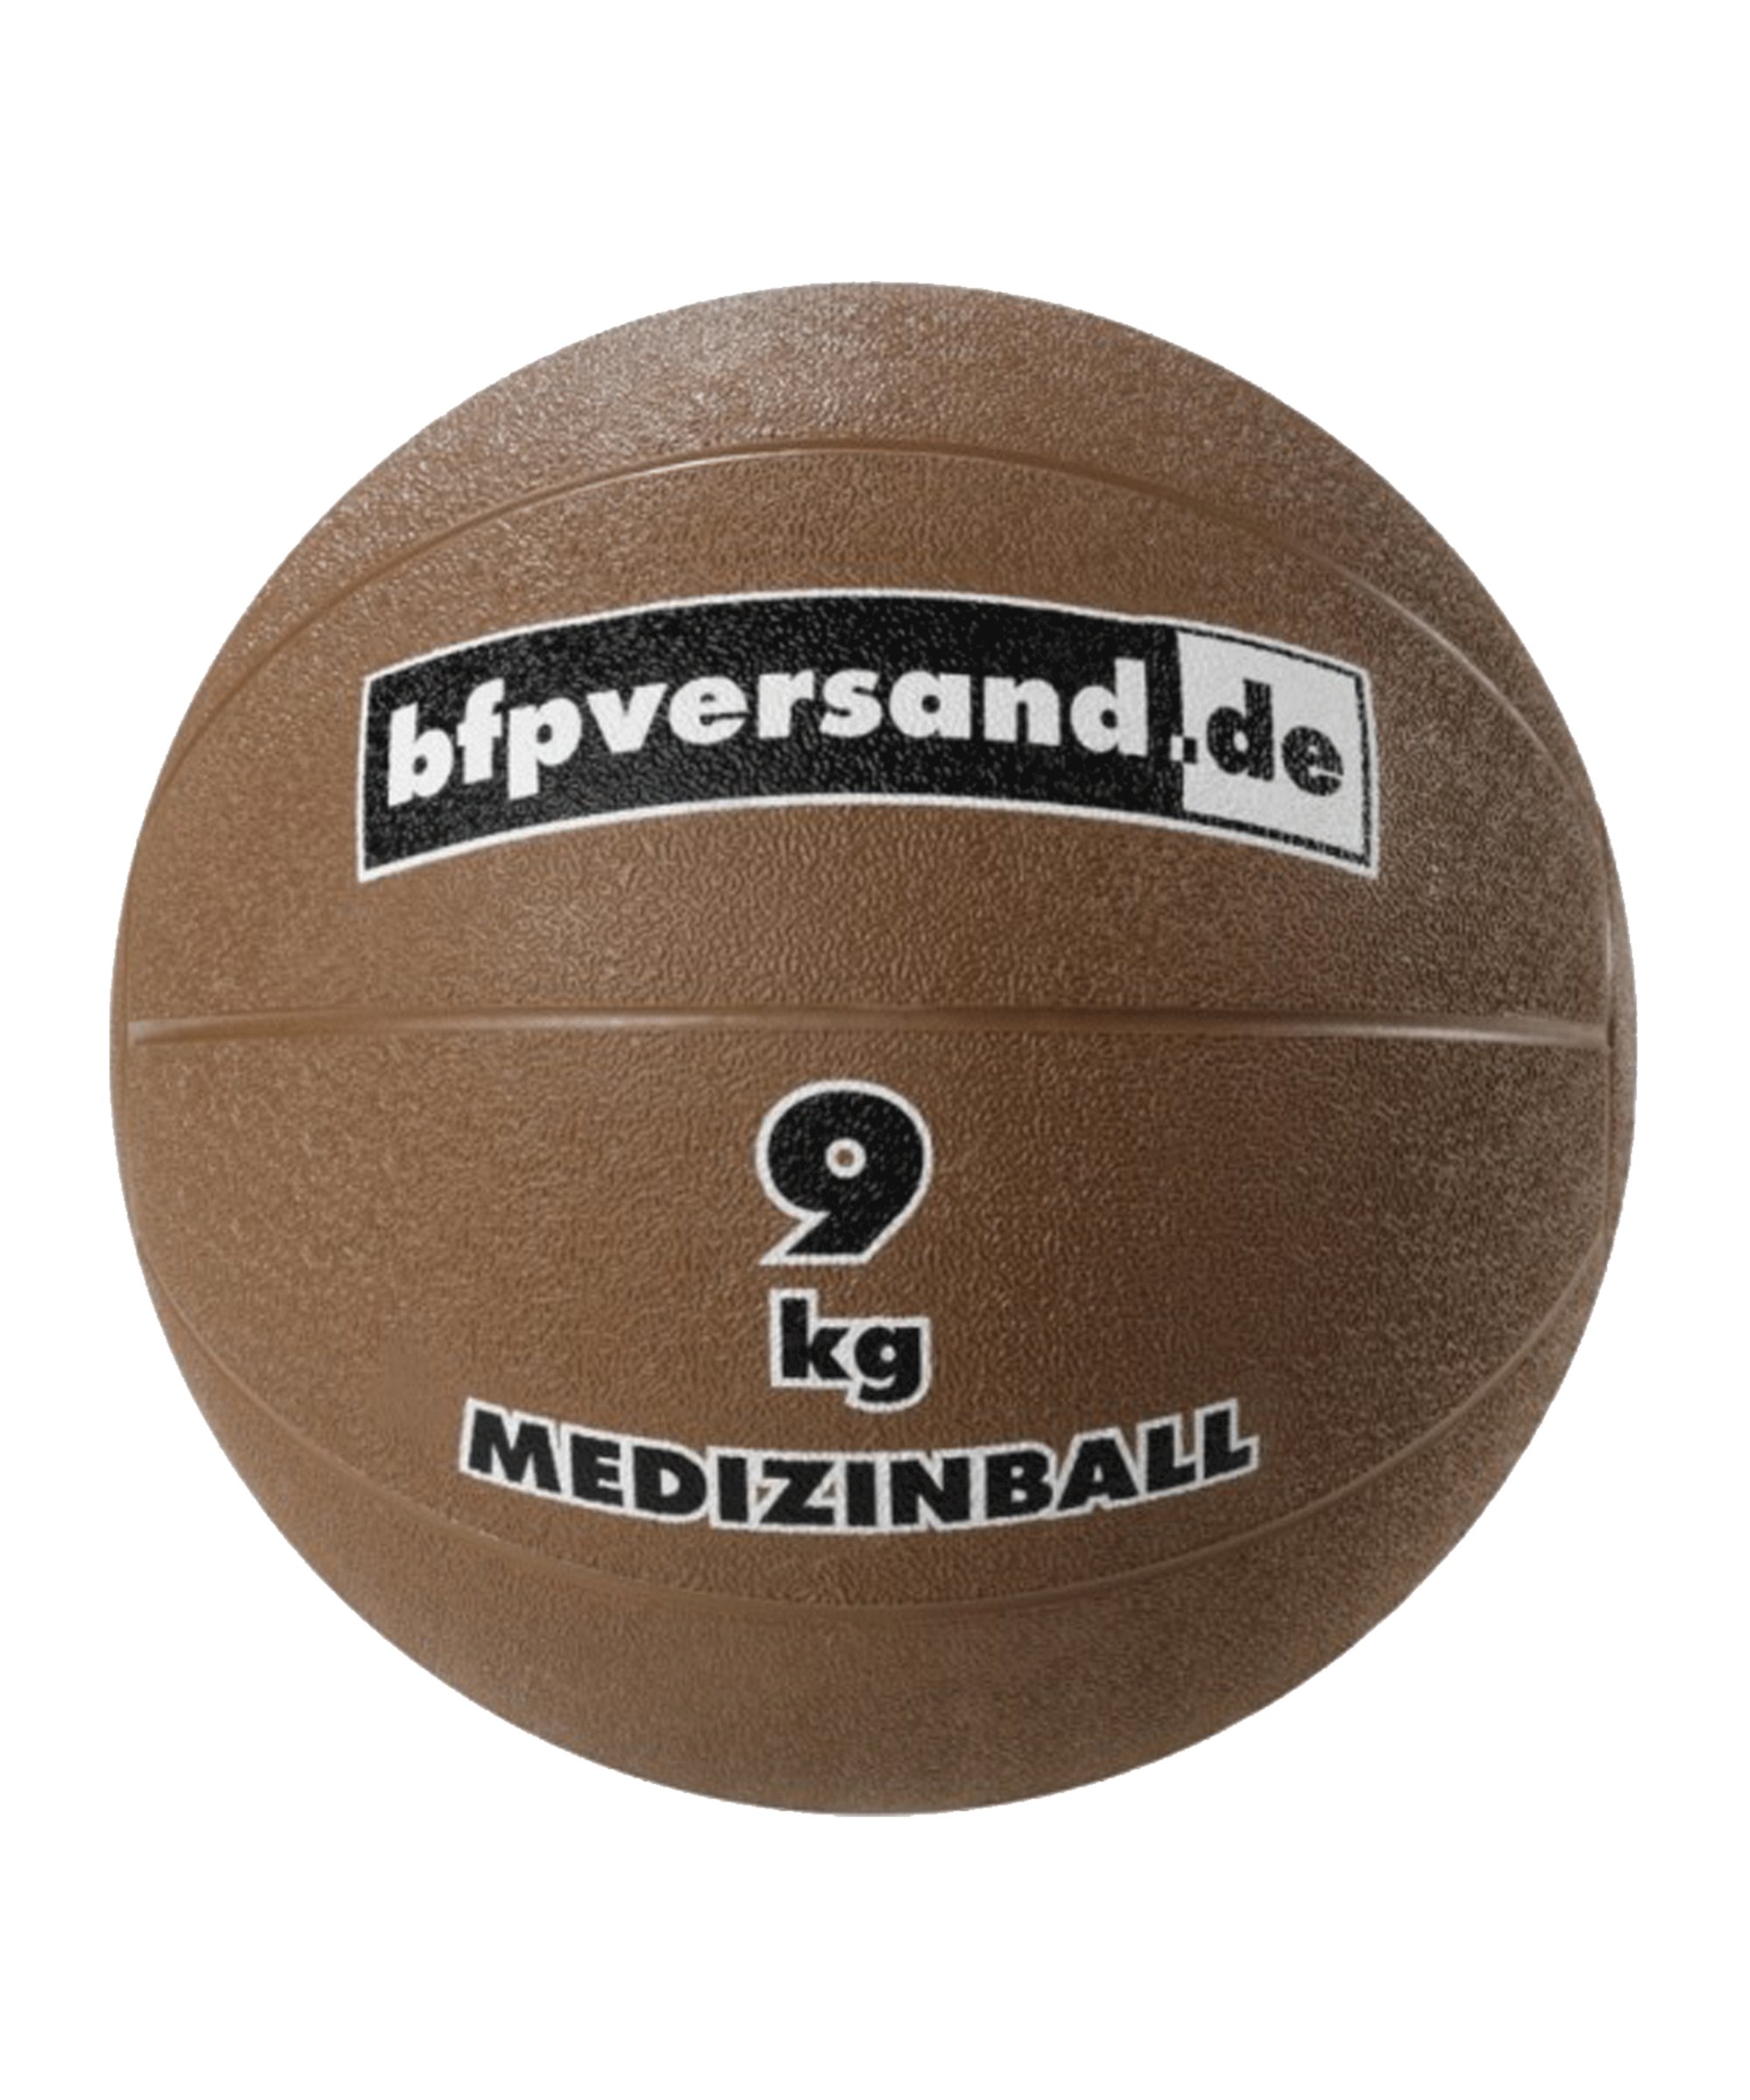 Cawila BFP Medizinball 9,0 Kg Braun - braun